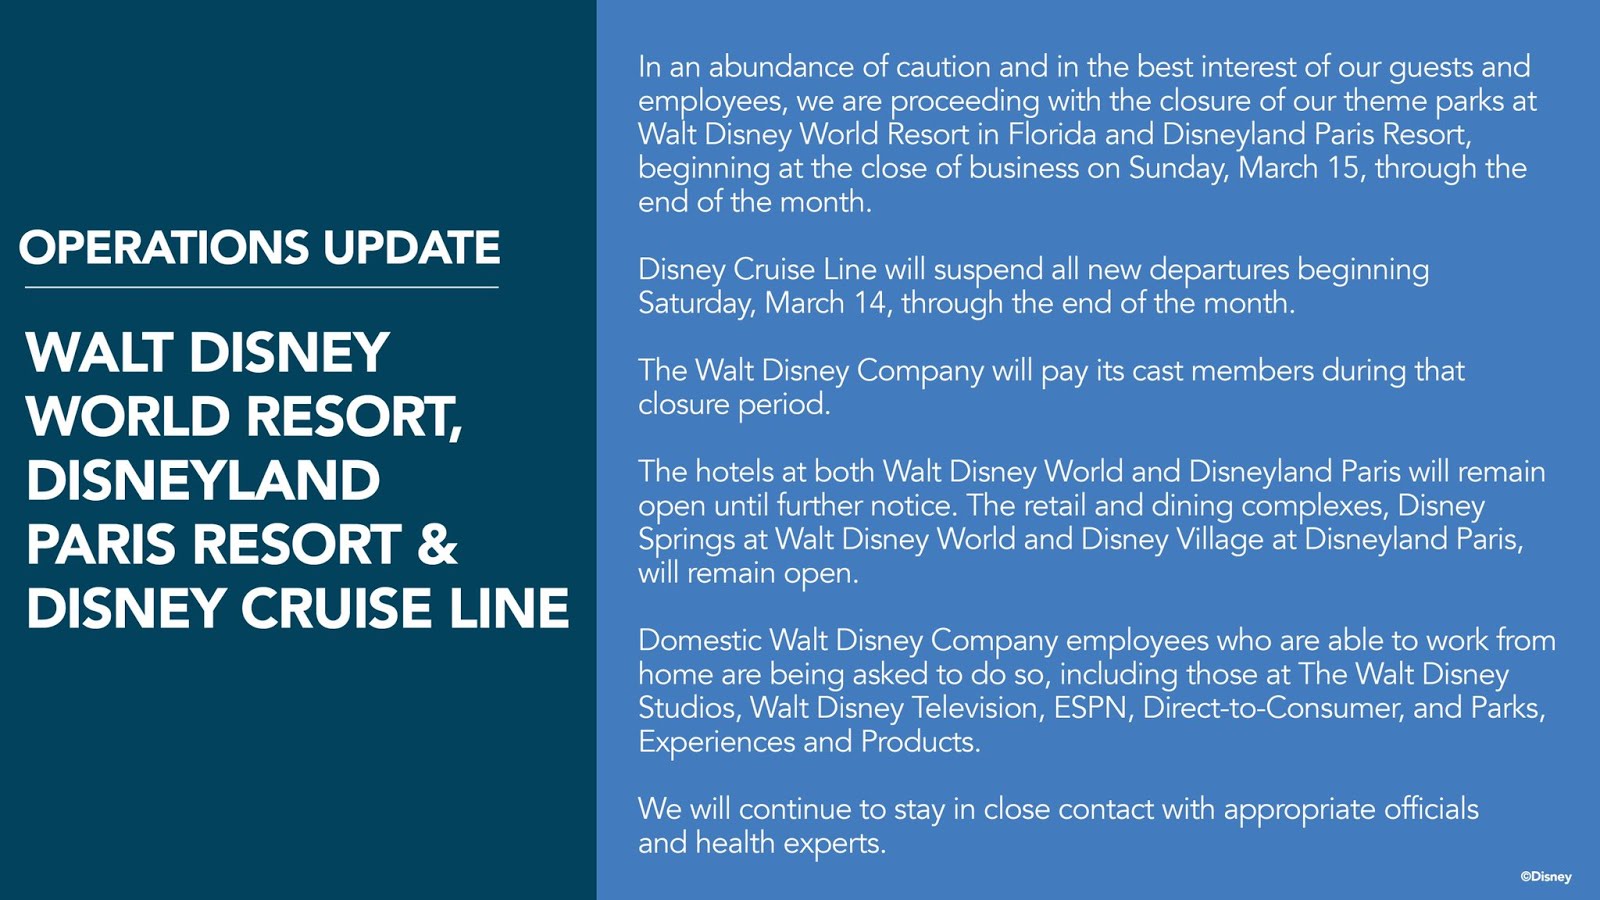 Disney Announces Closure of Disneyland, Walt Disney World, and